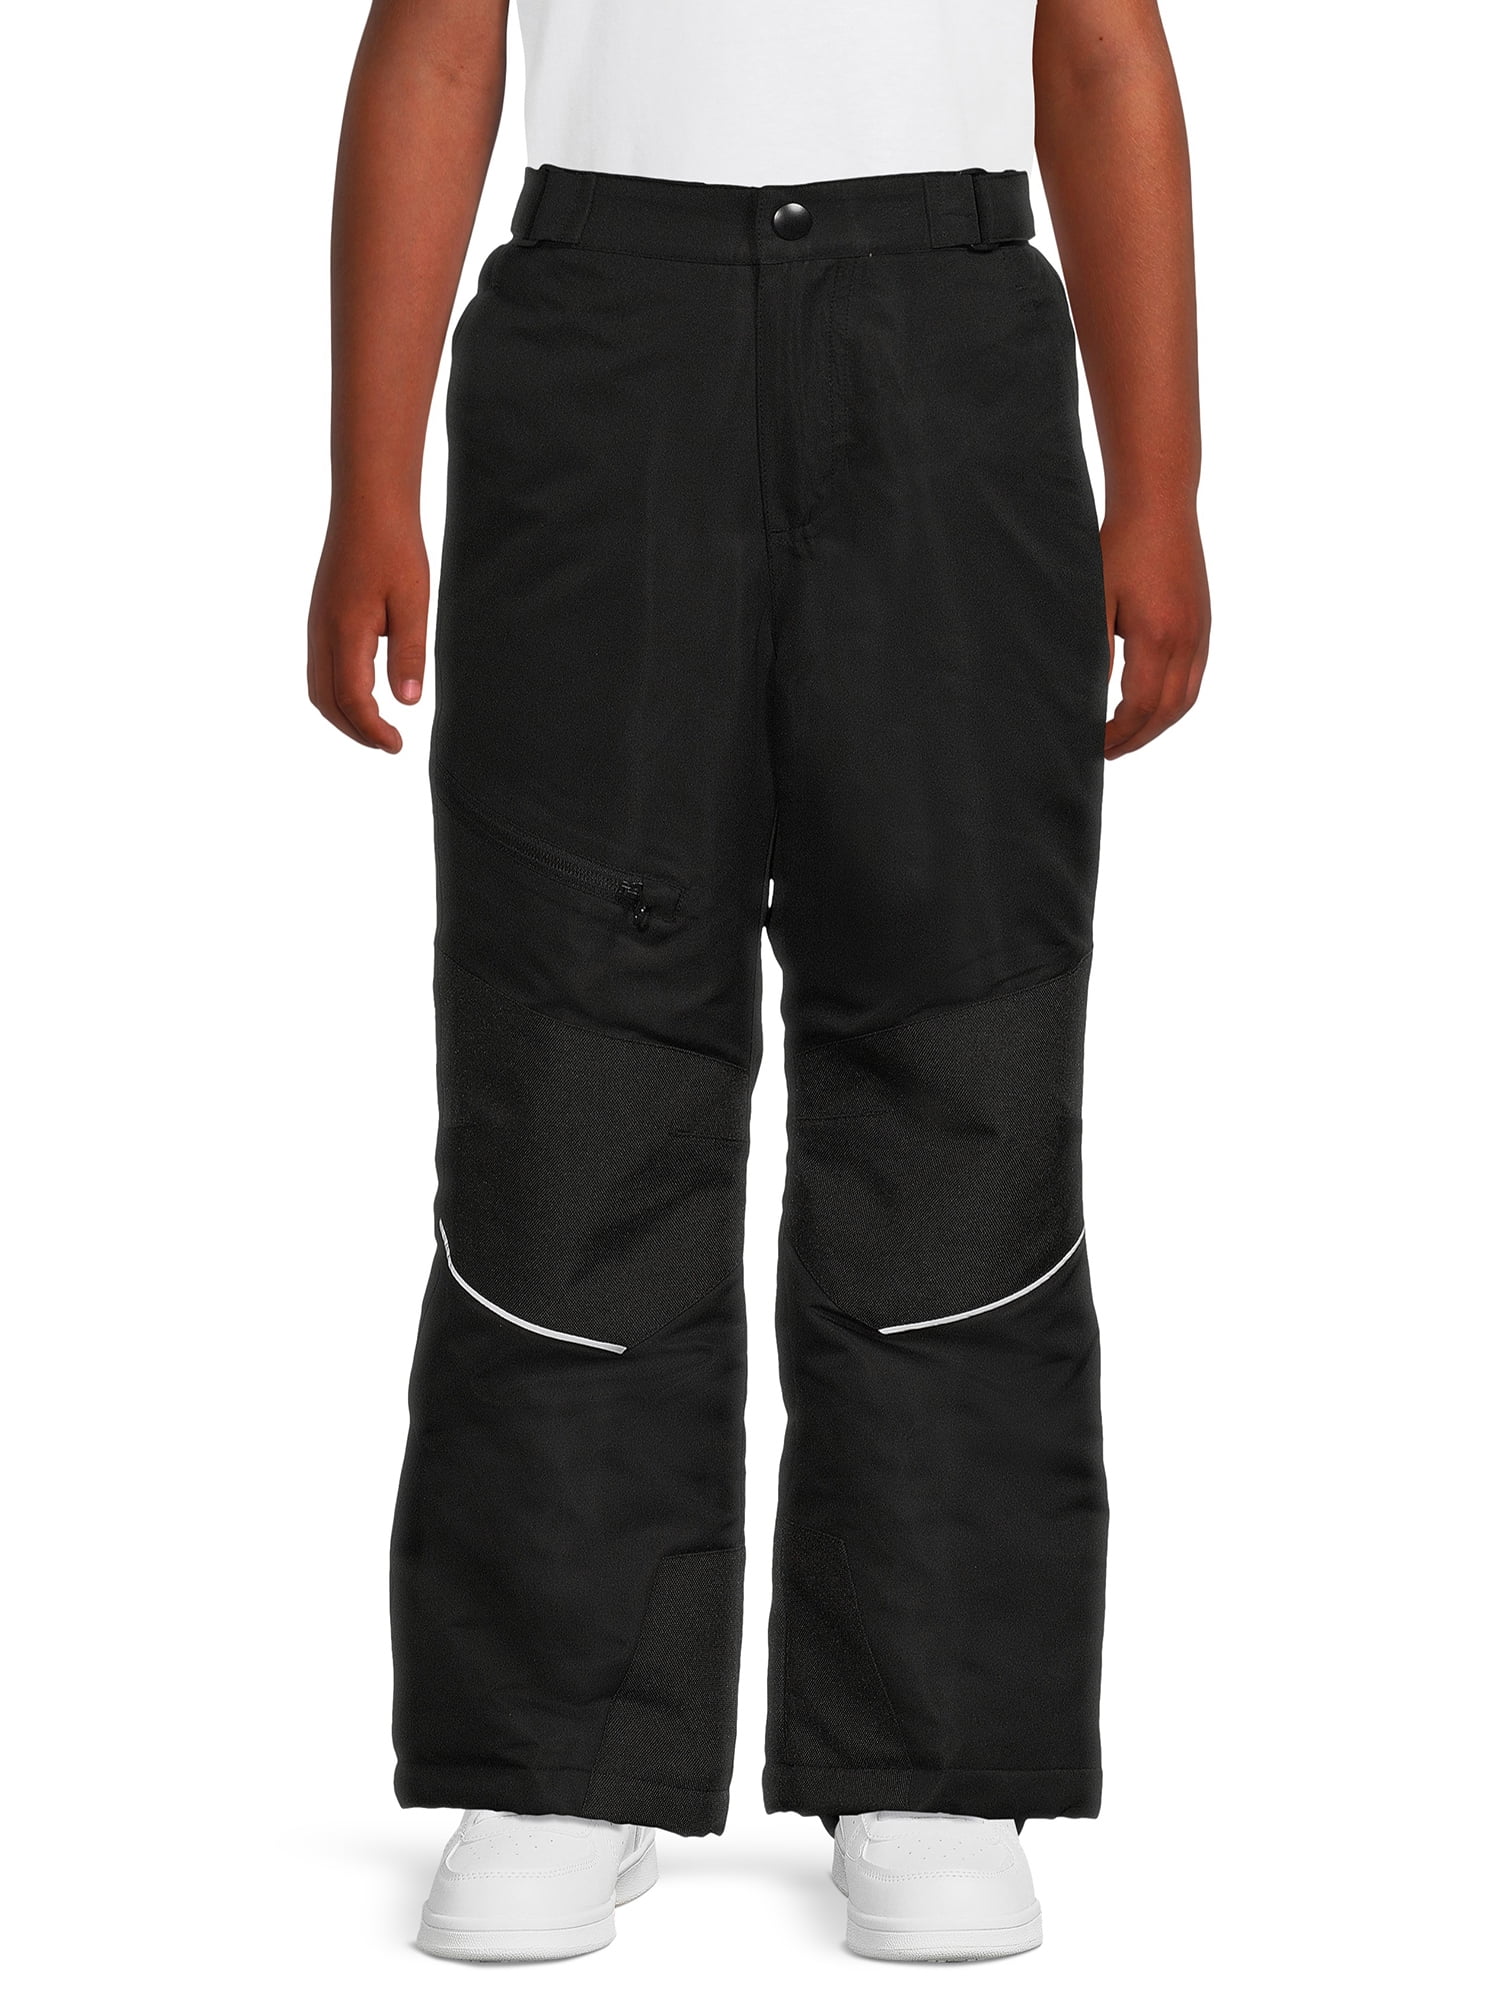 Swiss Tech Boys Water Repellent Snow Pants, Sizes 4-18